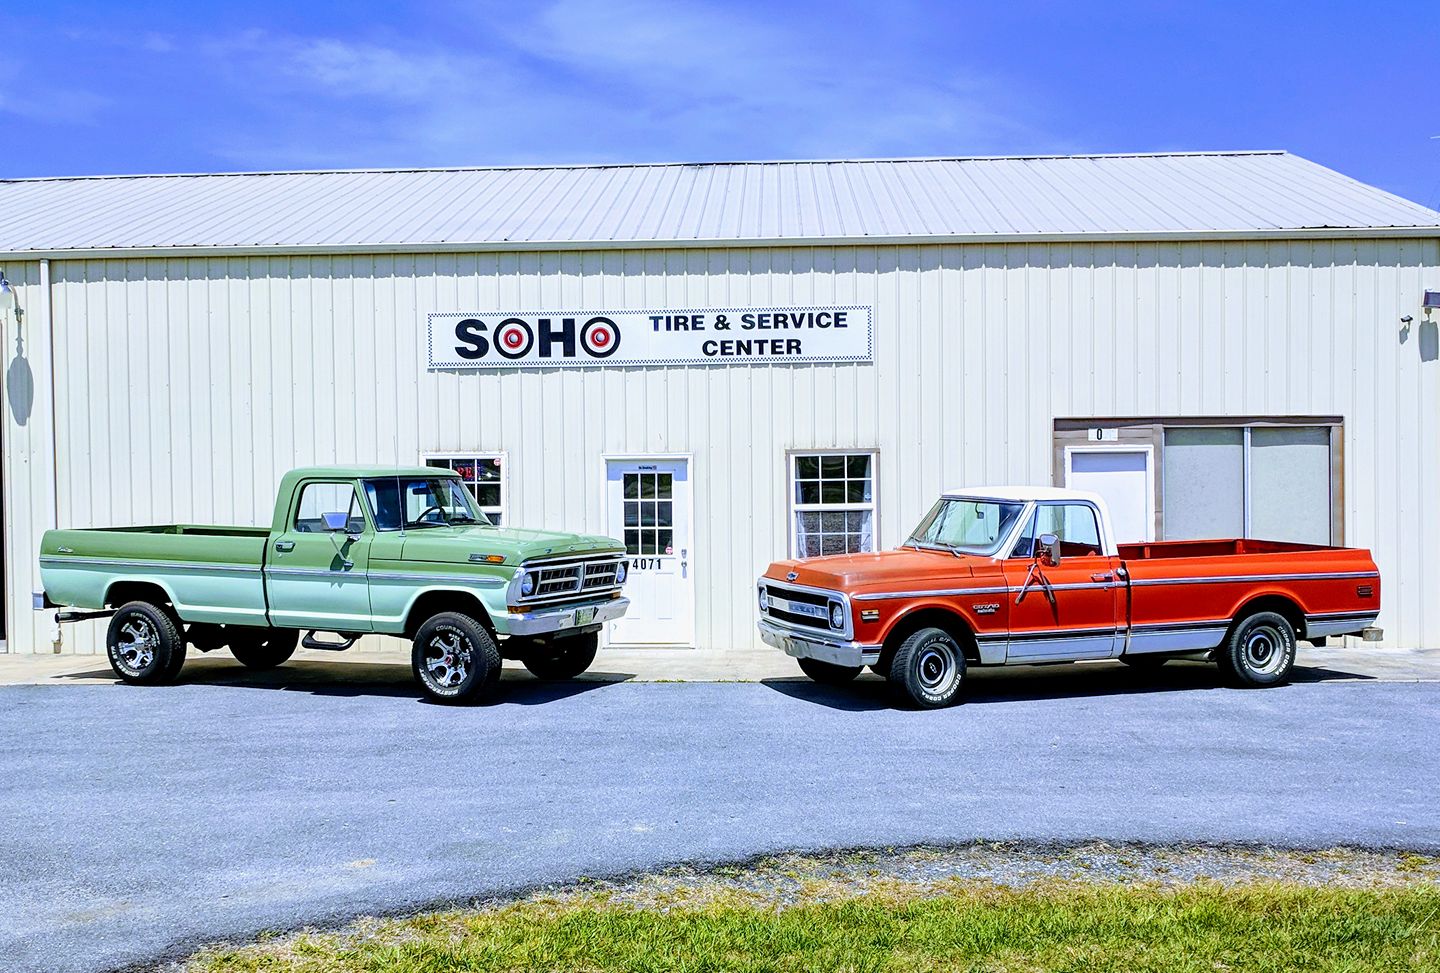 SOHO Tire and Service Center